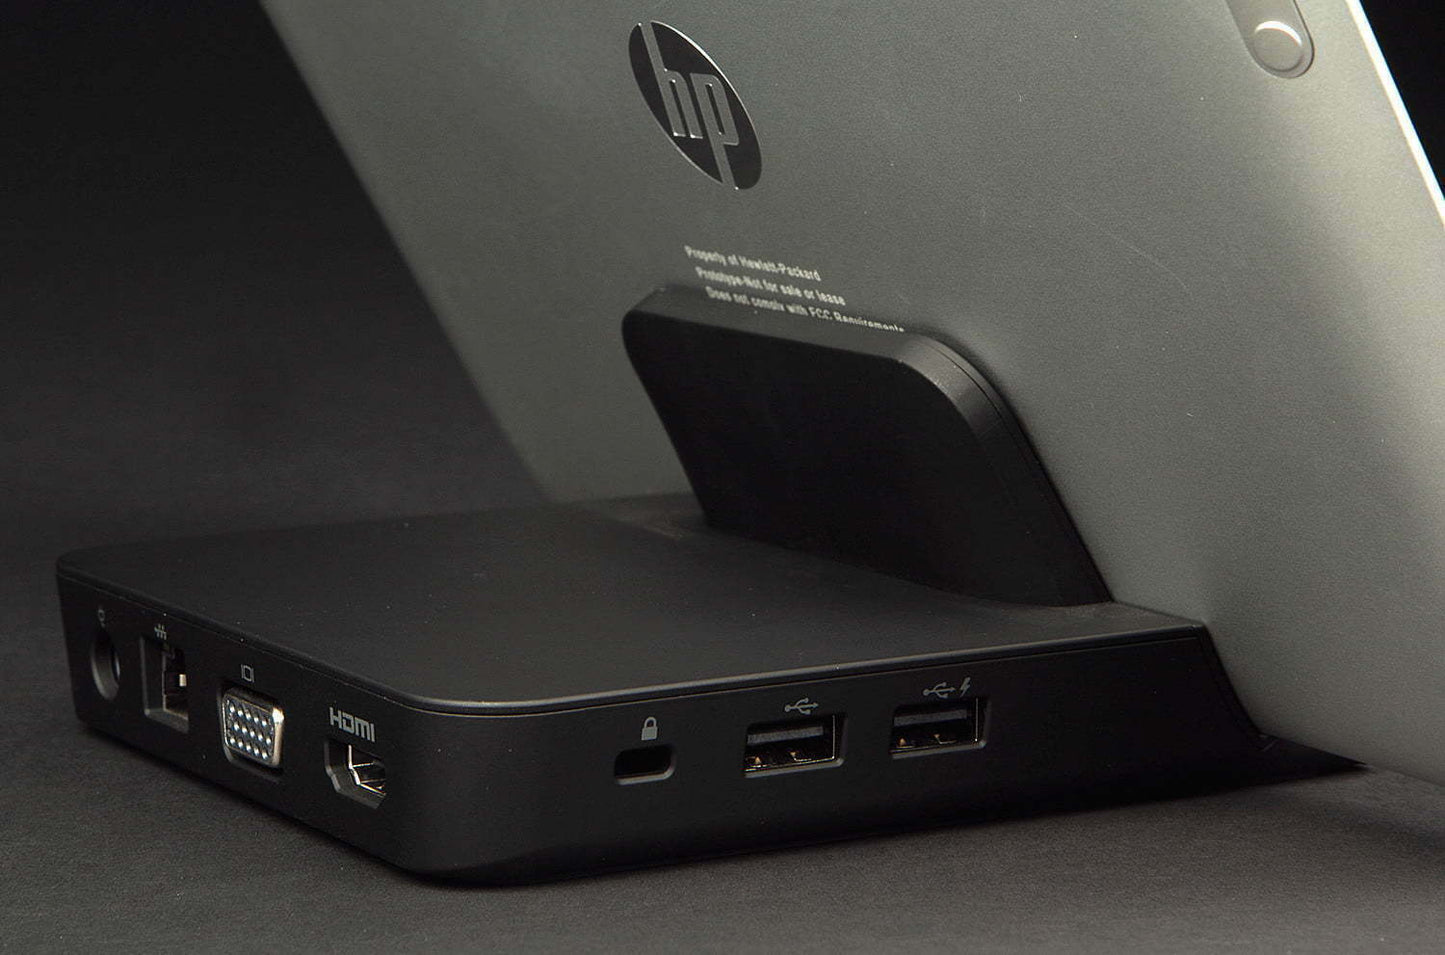 HP Elitepad Docking Station For Tablet PC 4x USB Ports Network (RJ45) HDMI VGA